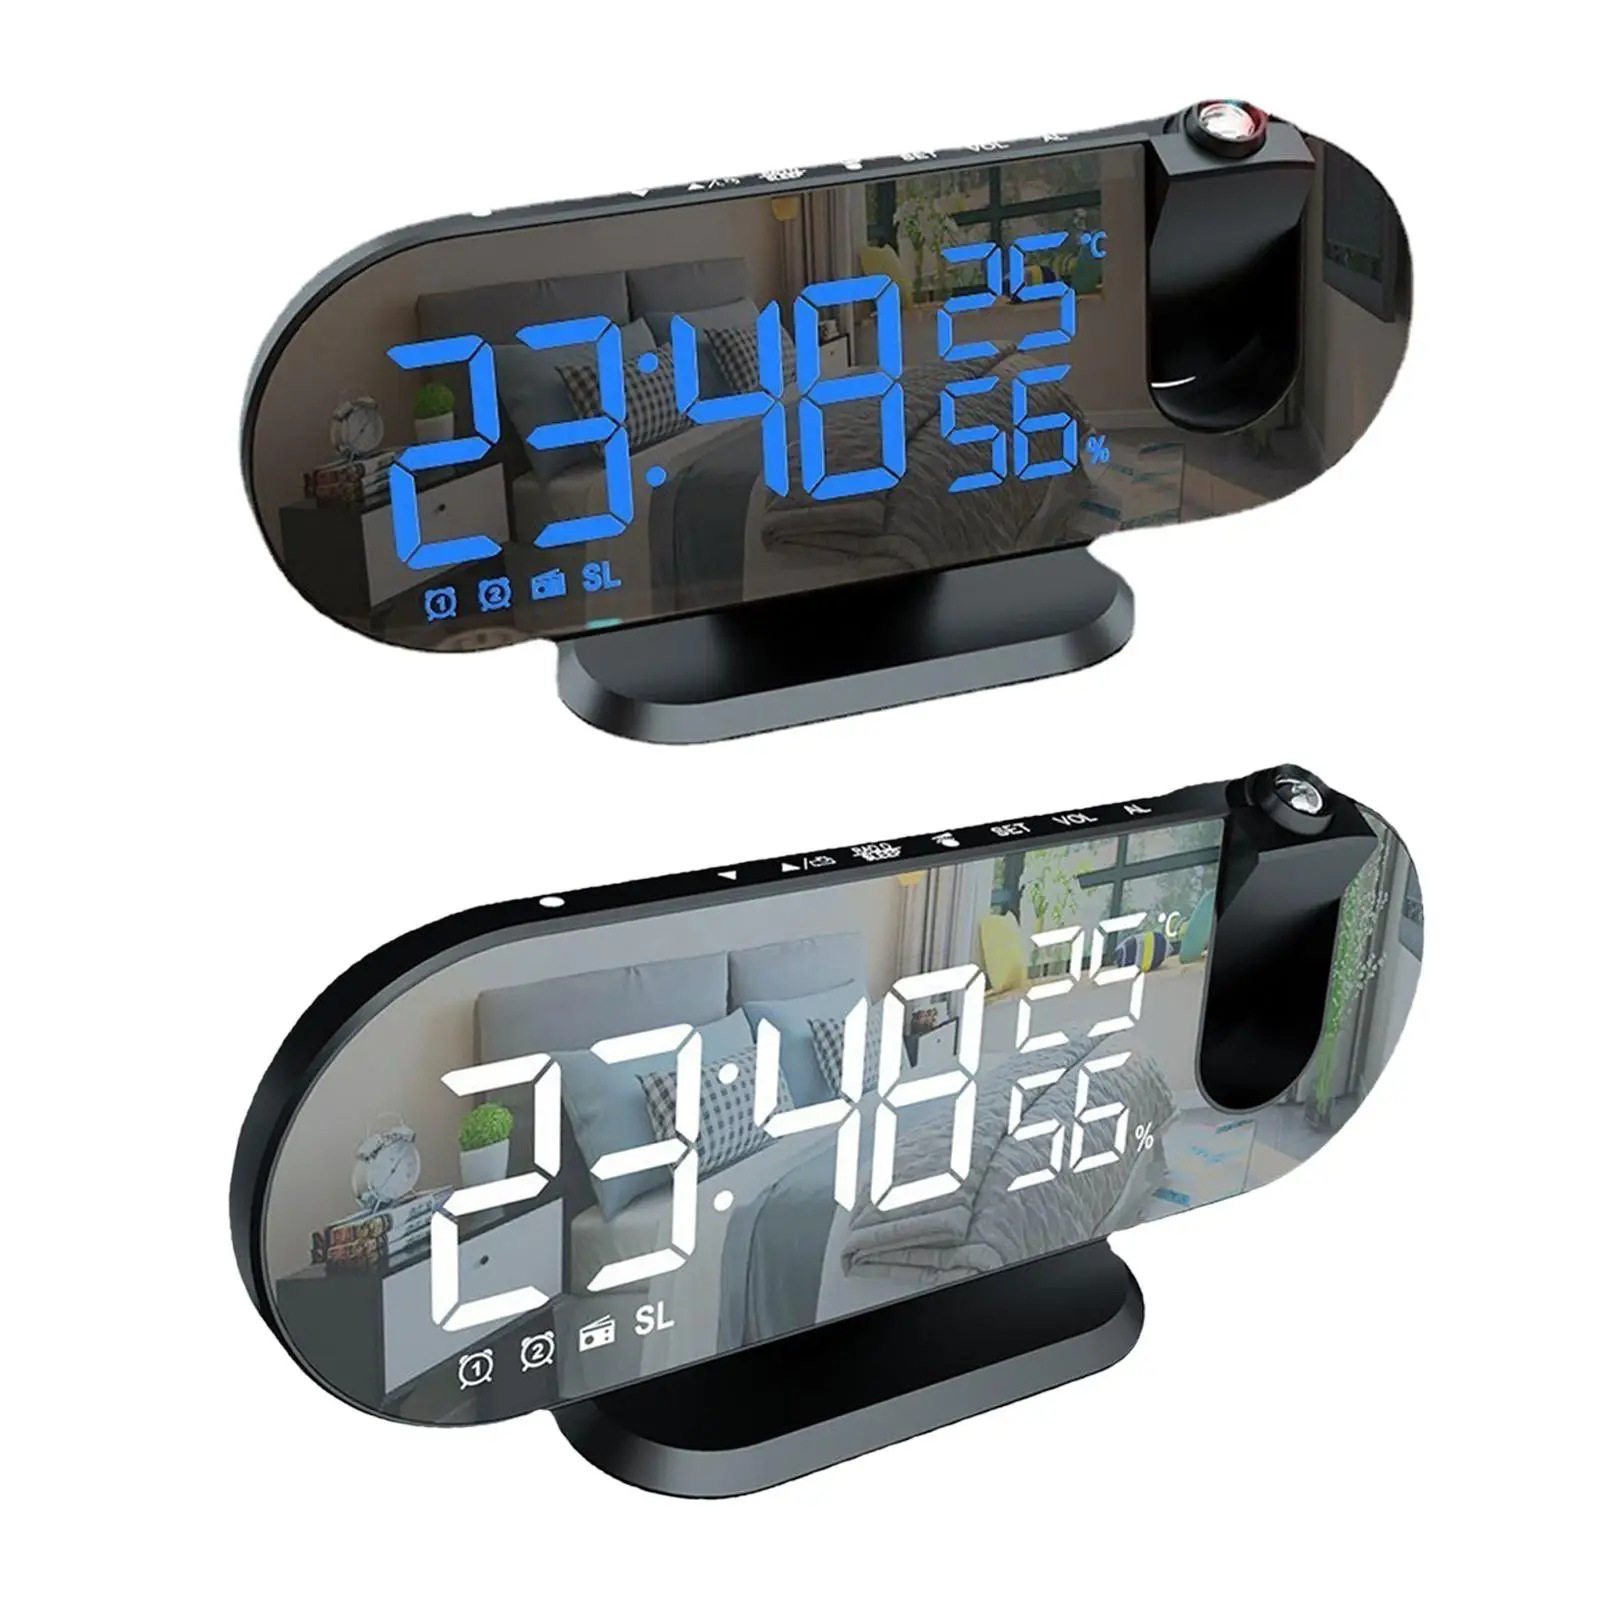 Digital Alarm Clock Projector for Bedroom, LED Alarm Clock Projection on Ceiling